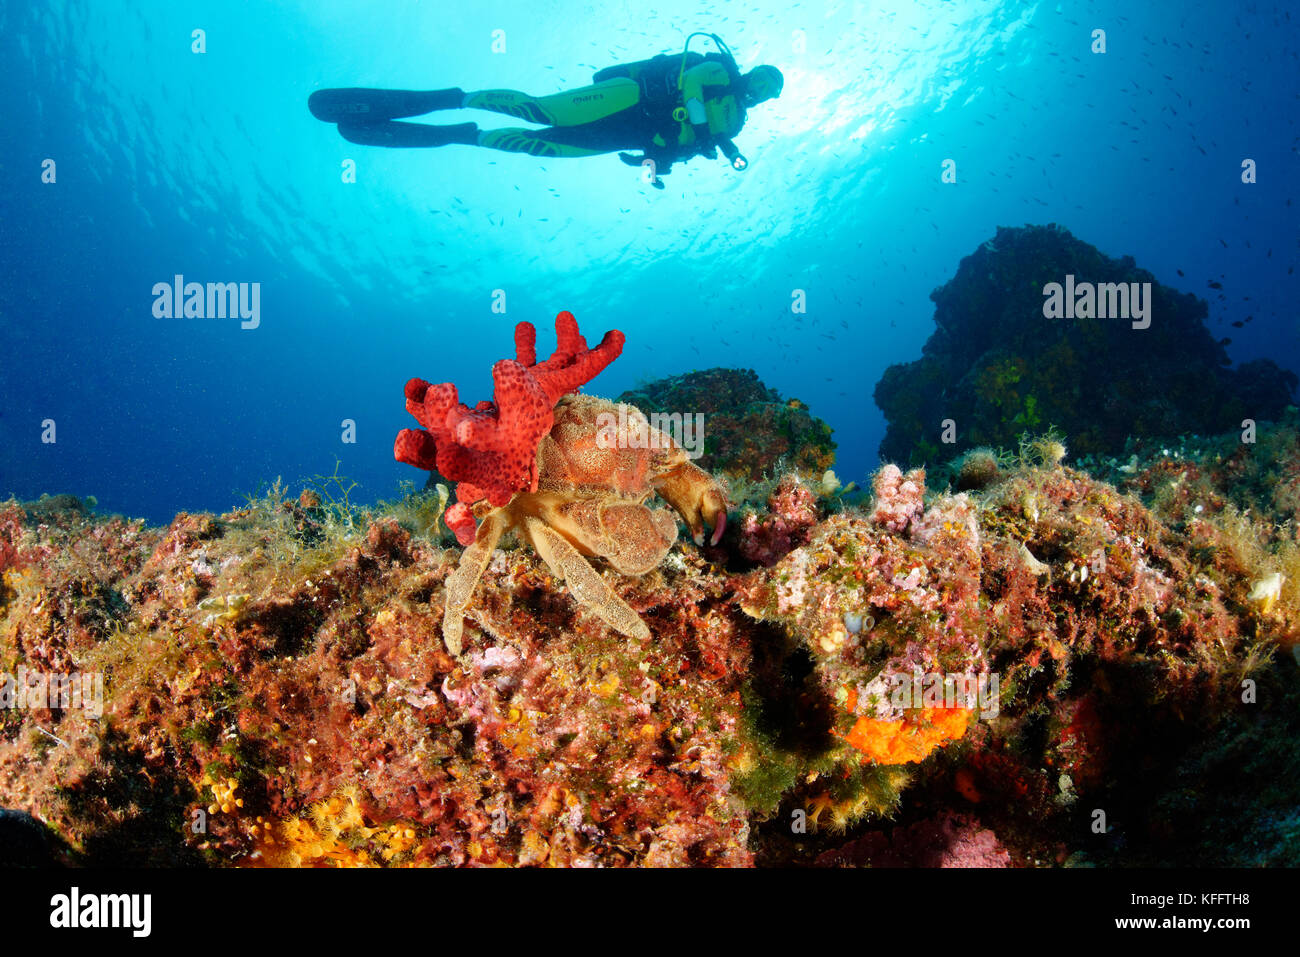 Sleepy crab, Dromia personata and Alcyonium palmatum ( Symbiosys ) and scuba diver, Adriatic Sea, Mediterranean Sea, Croatia Stock Photo